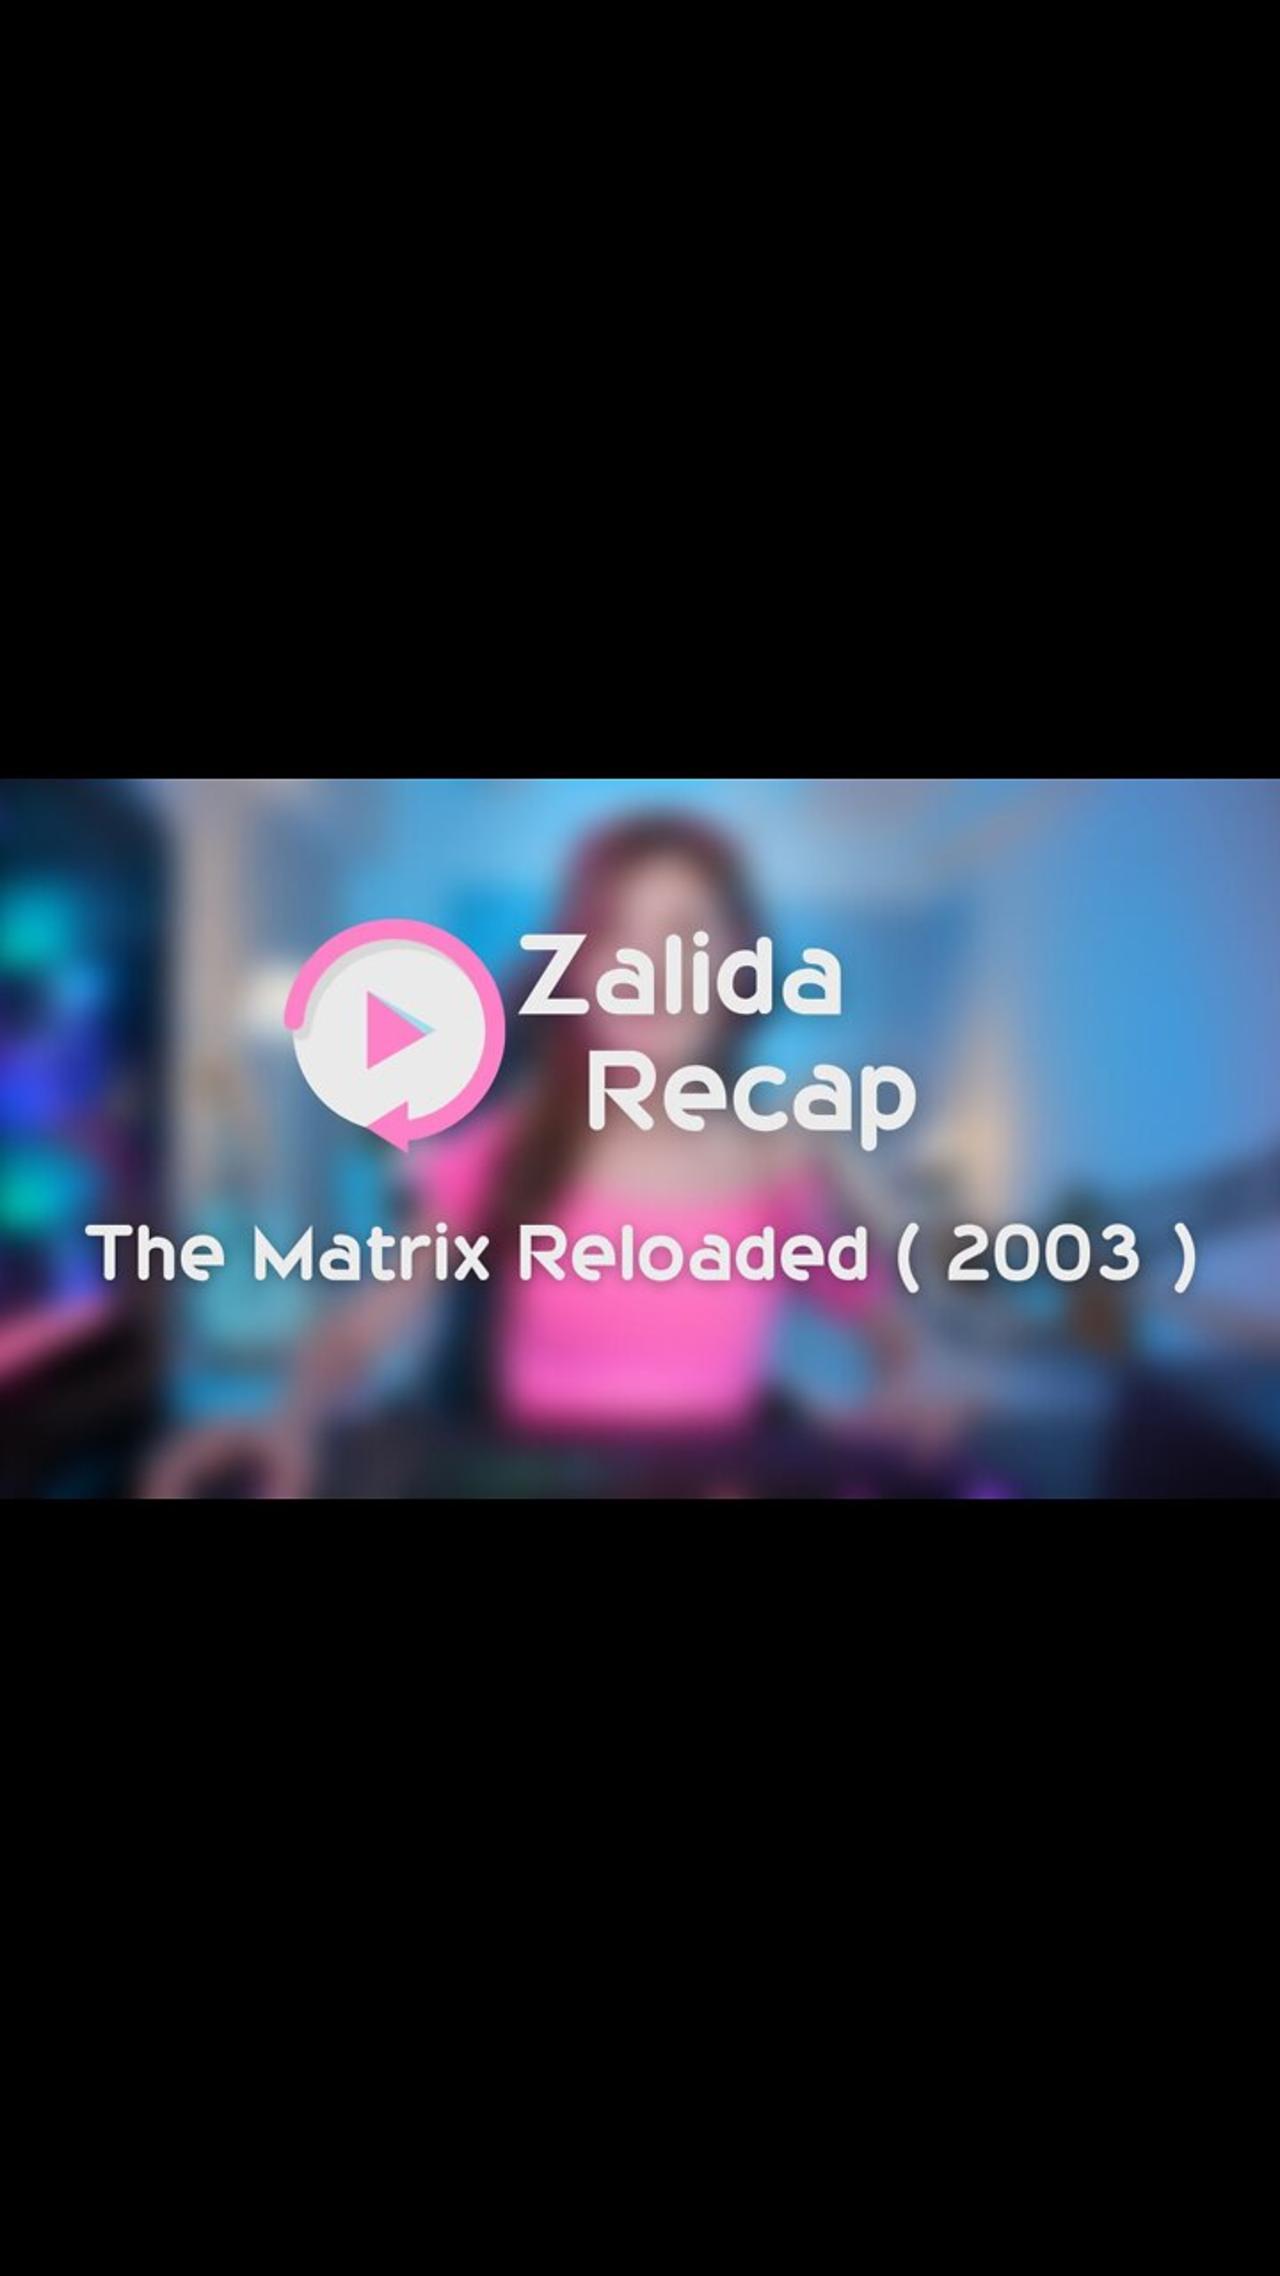 The Matrix Reloaded ( 2003 ) - Movie Recap Summary